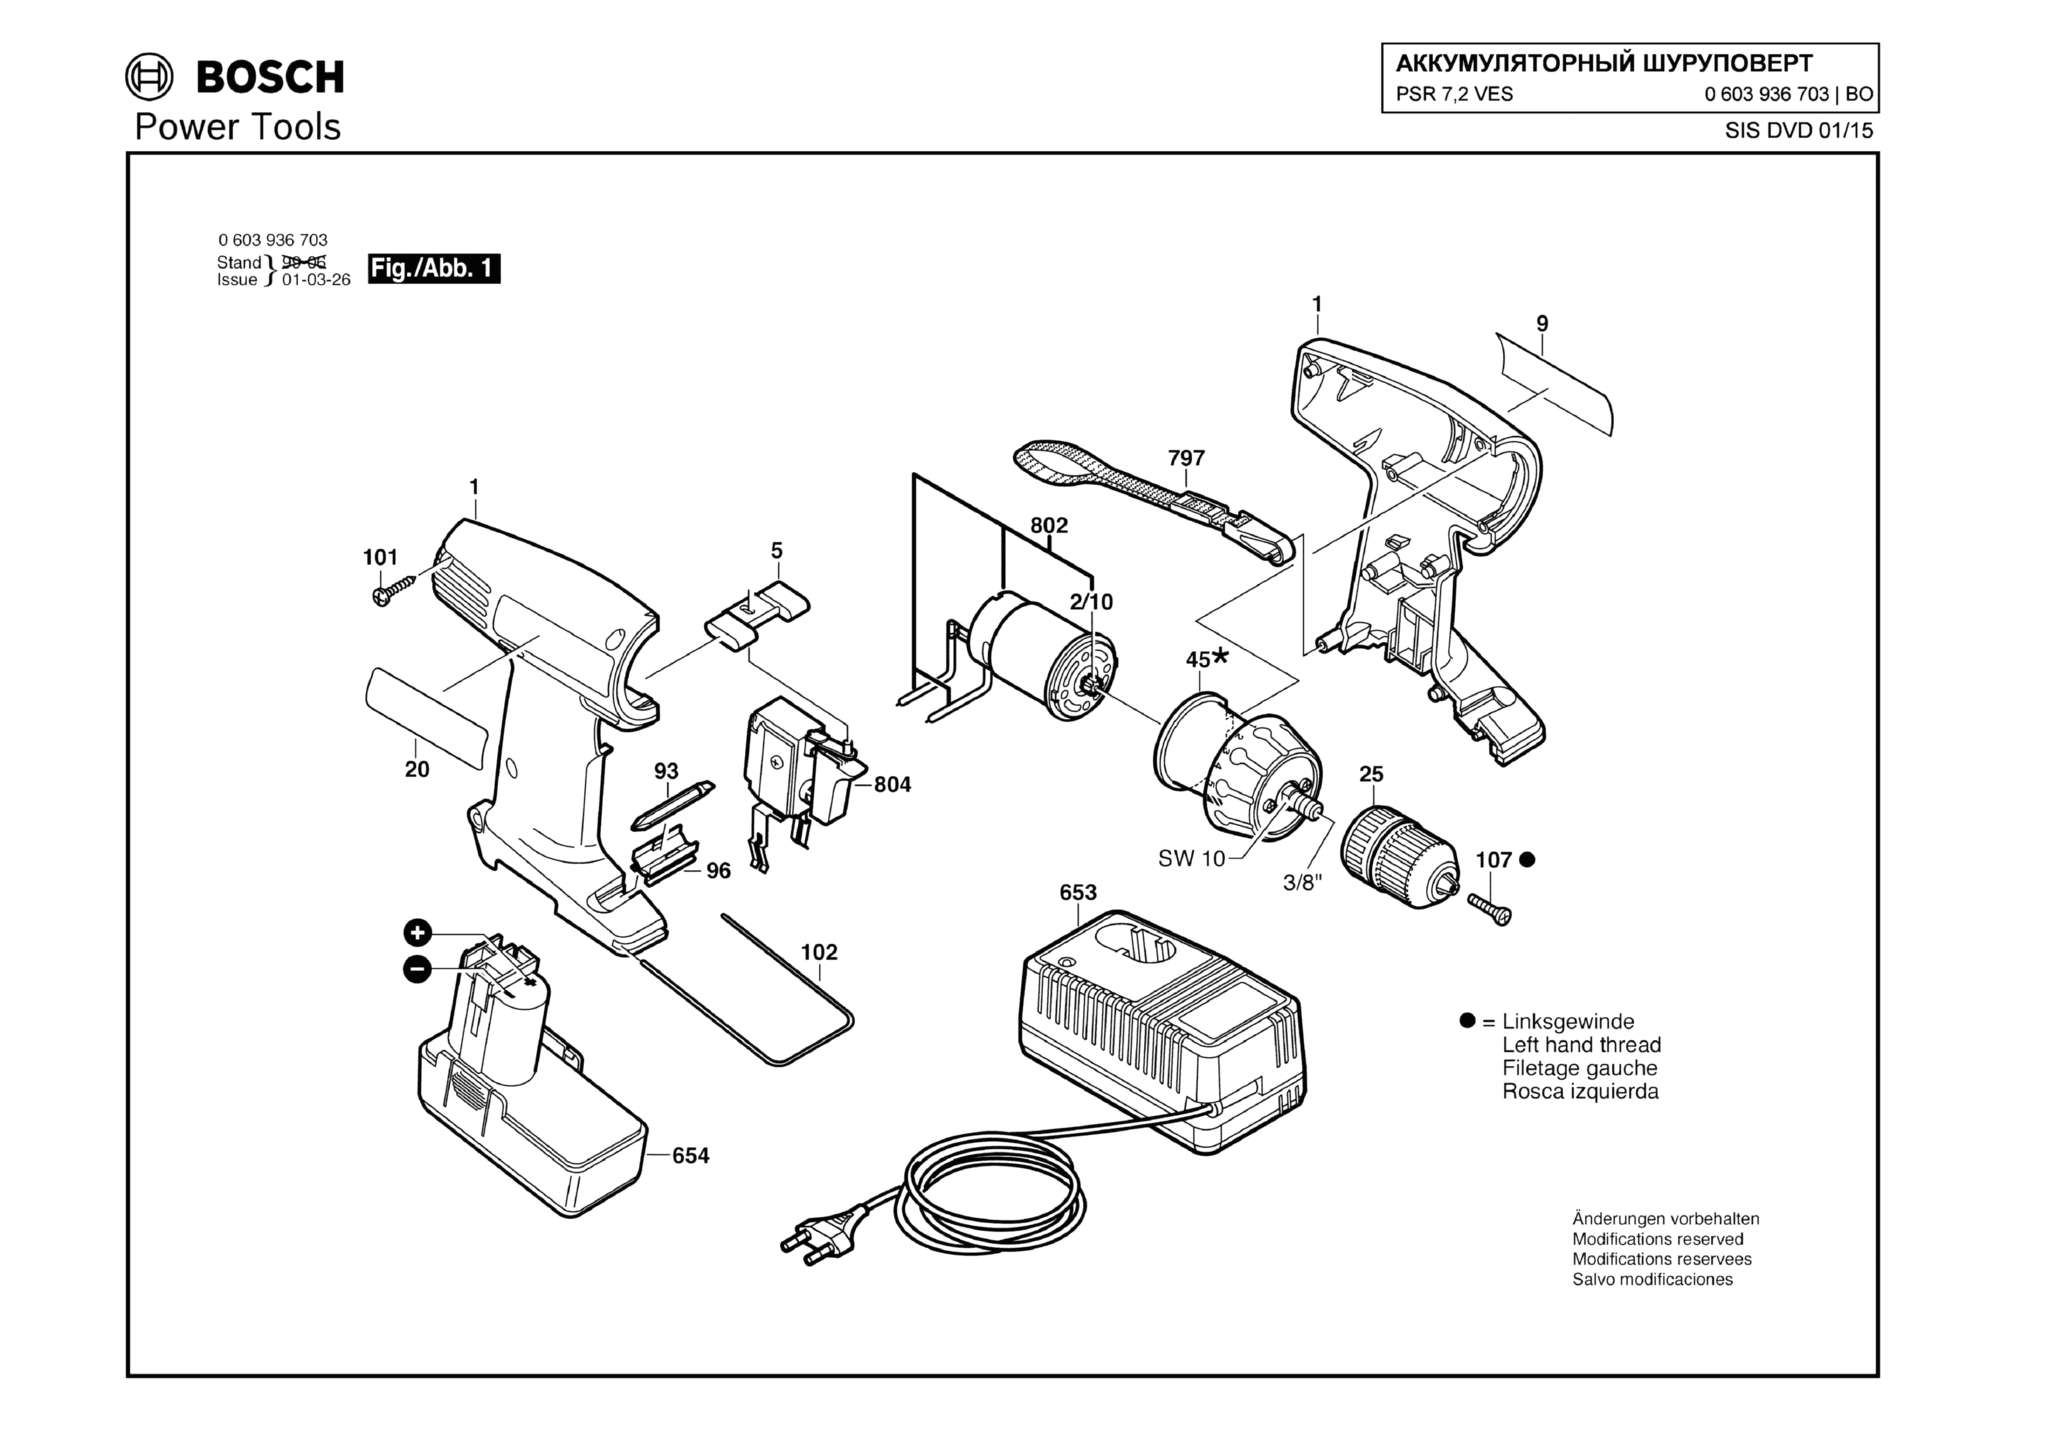 Запчасти, схема и деталировка Bosch PSR 7,2 VES (ТИП 0603936703)